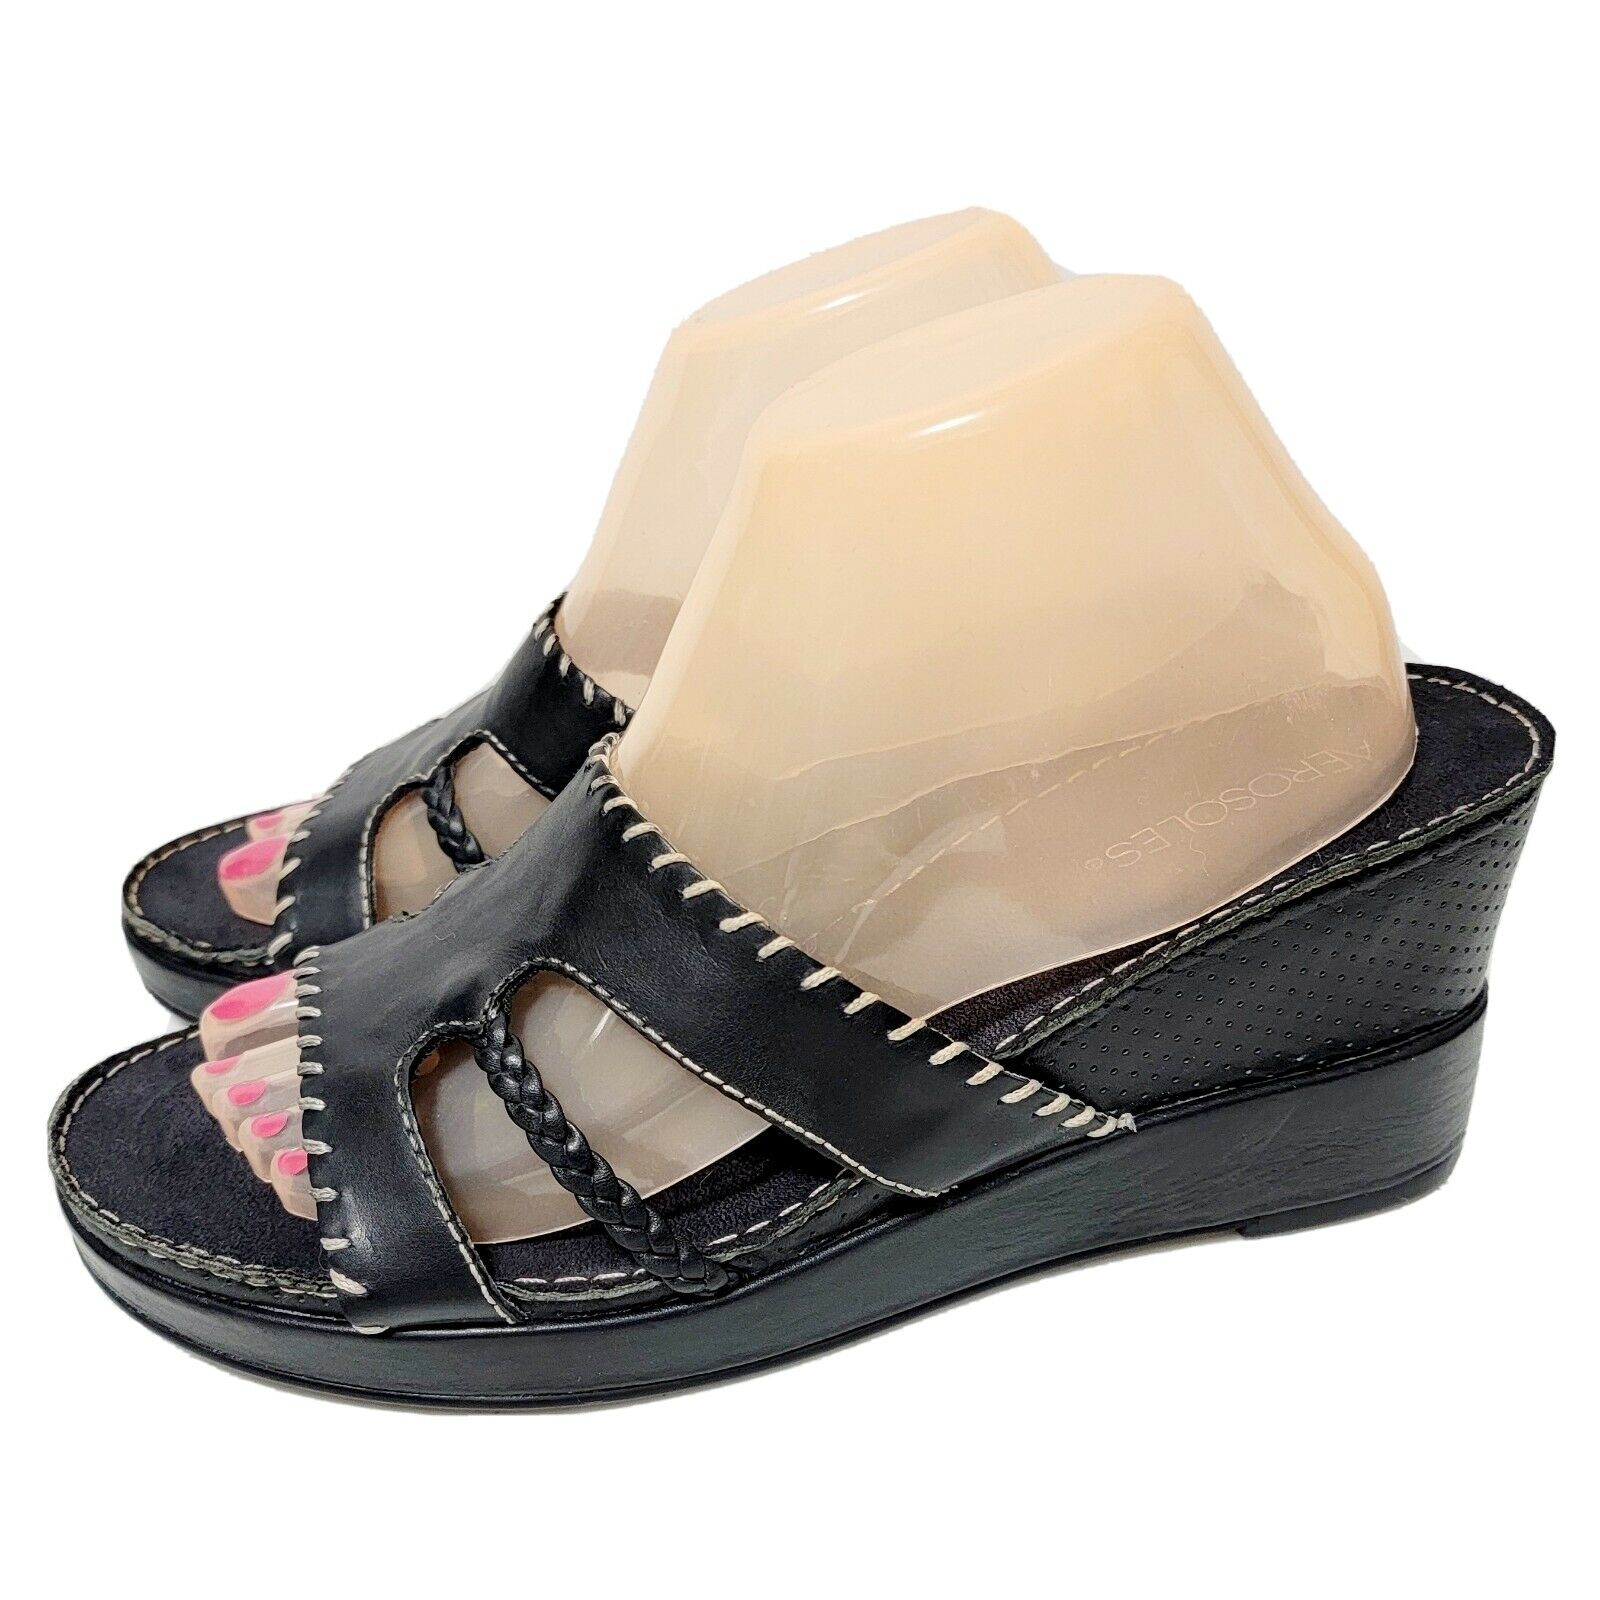 Aerosoles Womens 9.5M Wedge Sandals Slides Slip On Black Leather Shoes